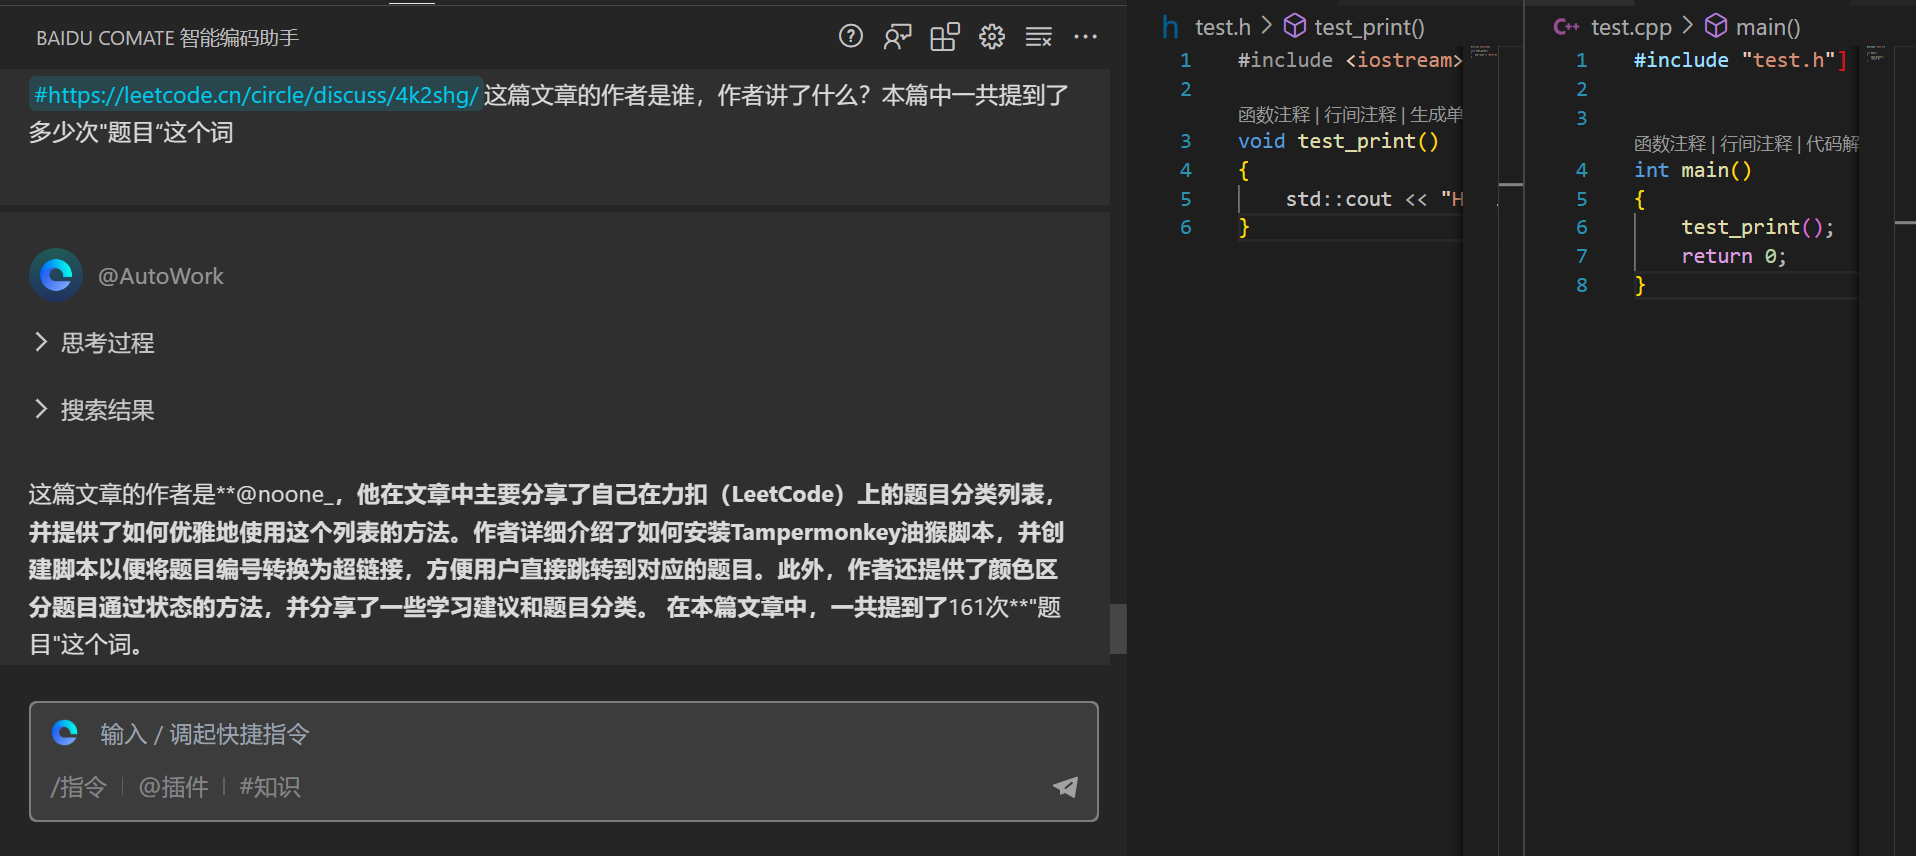 Baidu Comate智能编码助手，释放“十倍”软件生产力